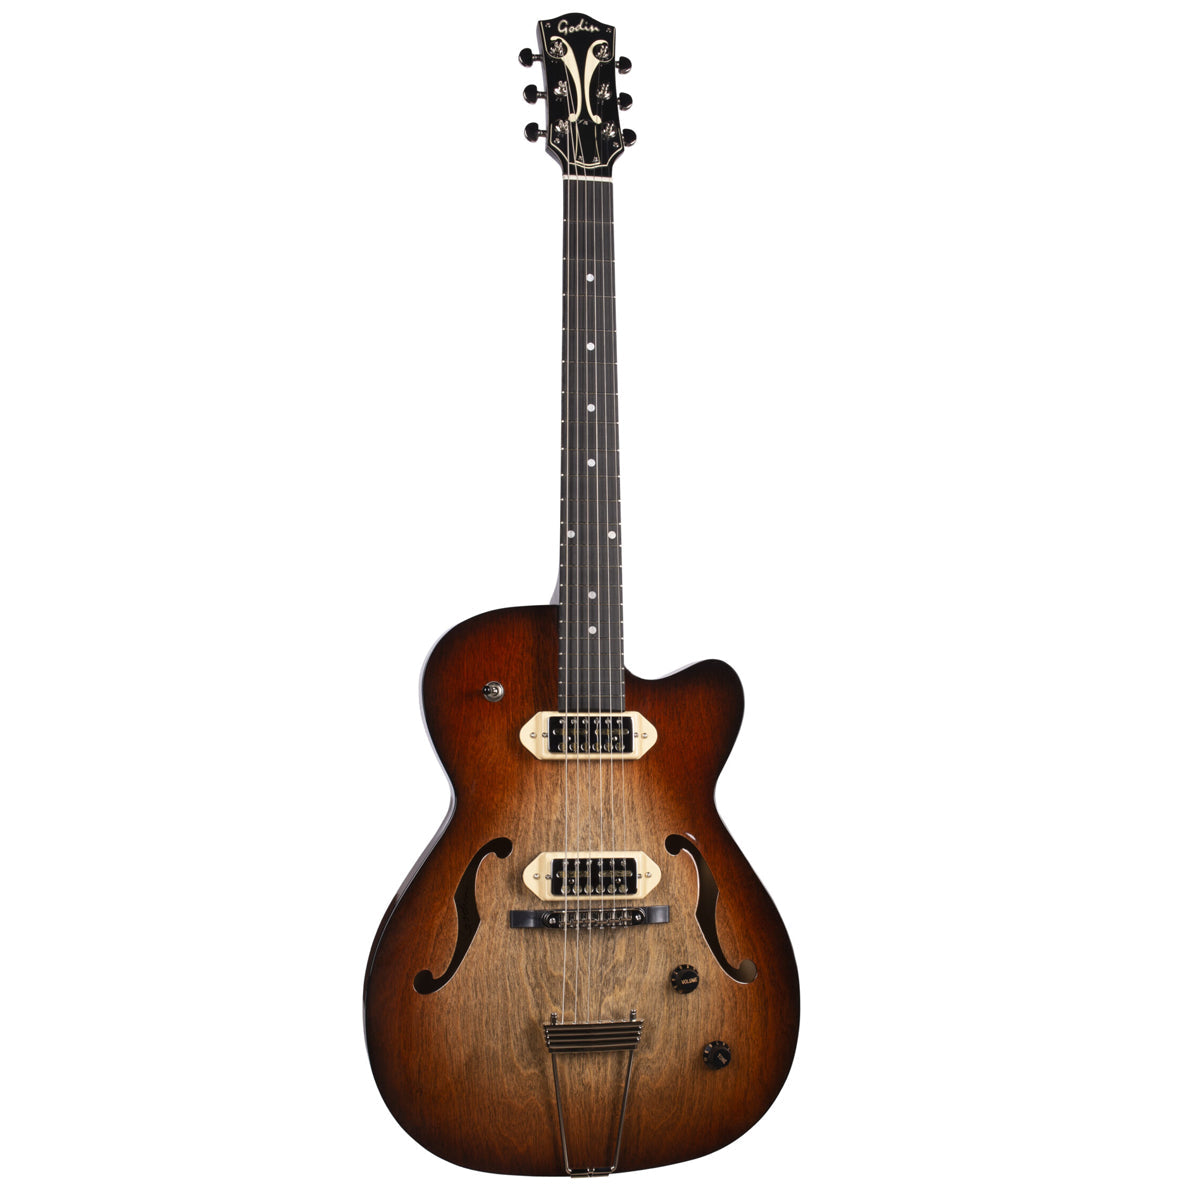 Godin 5th Avenue Thin Line Semi-Acoustic Guitar ~ Vintage Burst, Electric Guitar for sale at Richards Guitars.